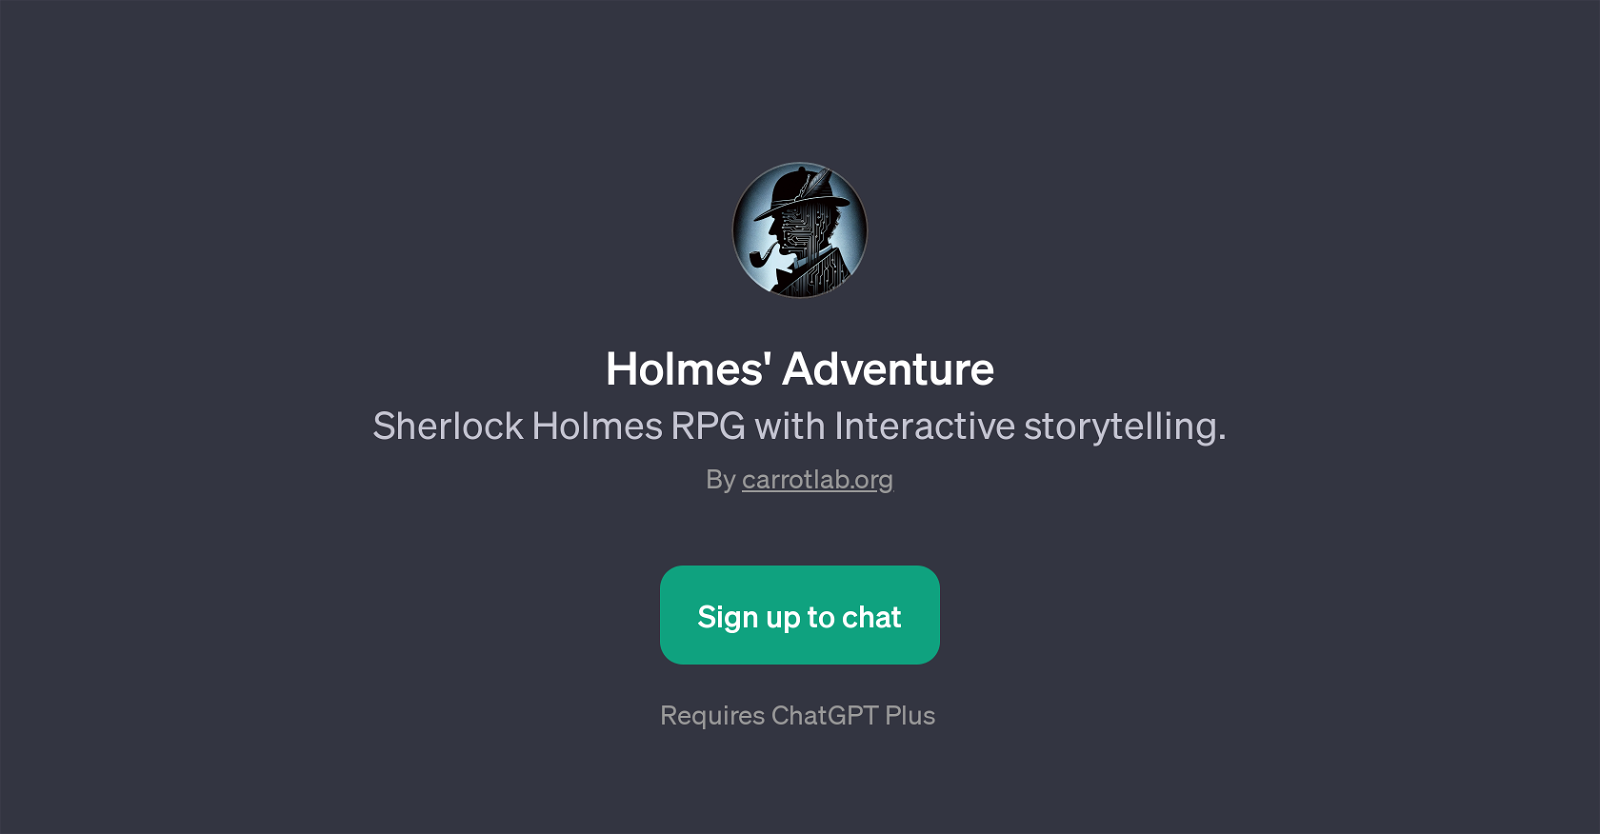 Holmes' Adventure website